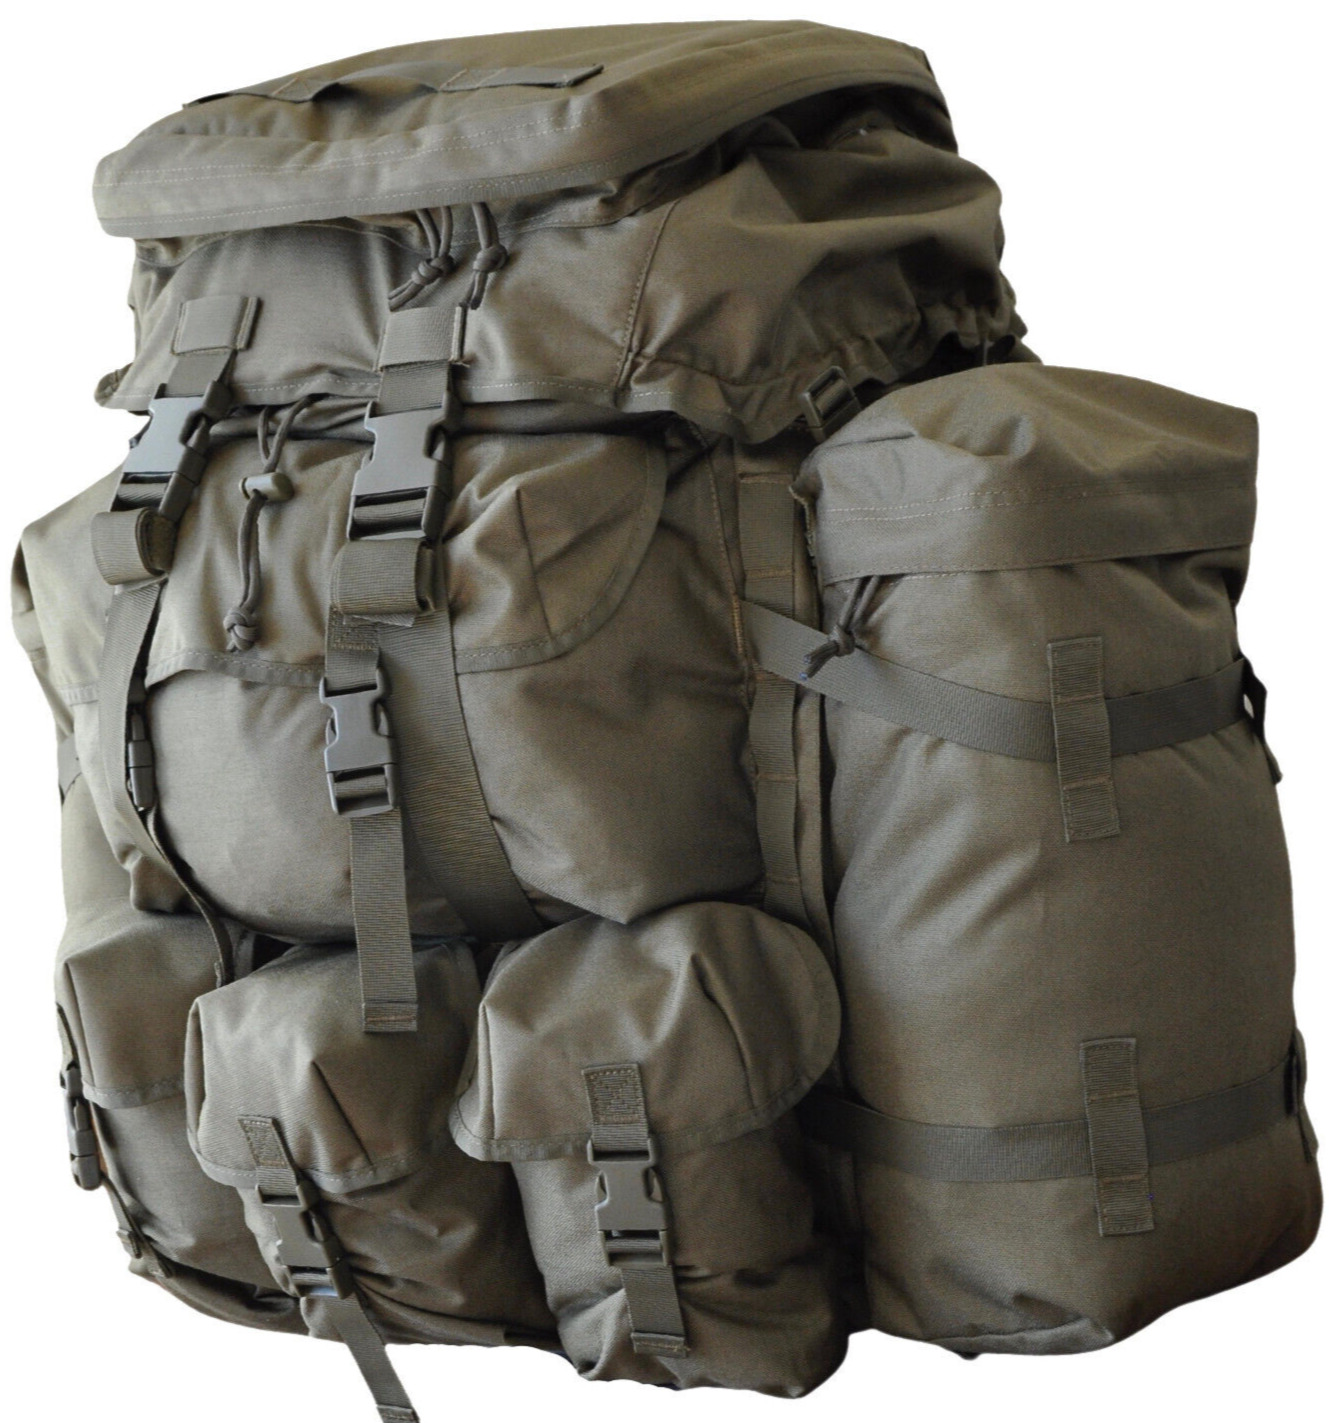 KitPimp Pathfinder 150L Green PLCE Rucksack Bergen Backpack Bag Surplus Tailored